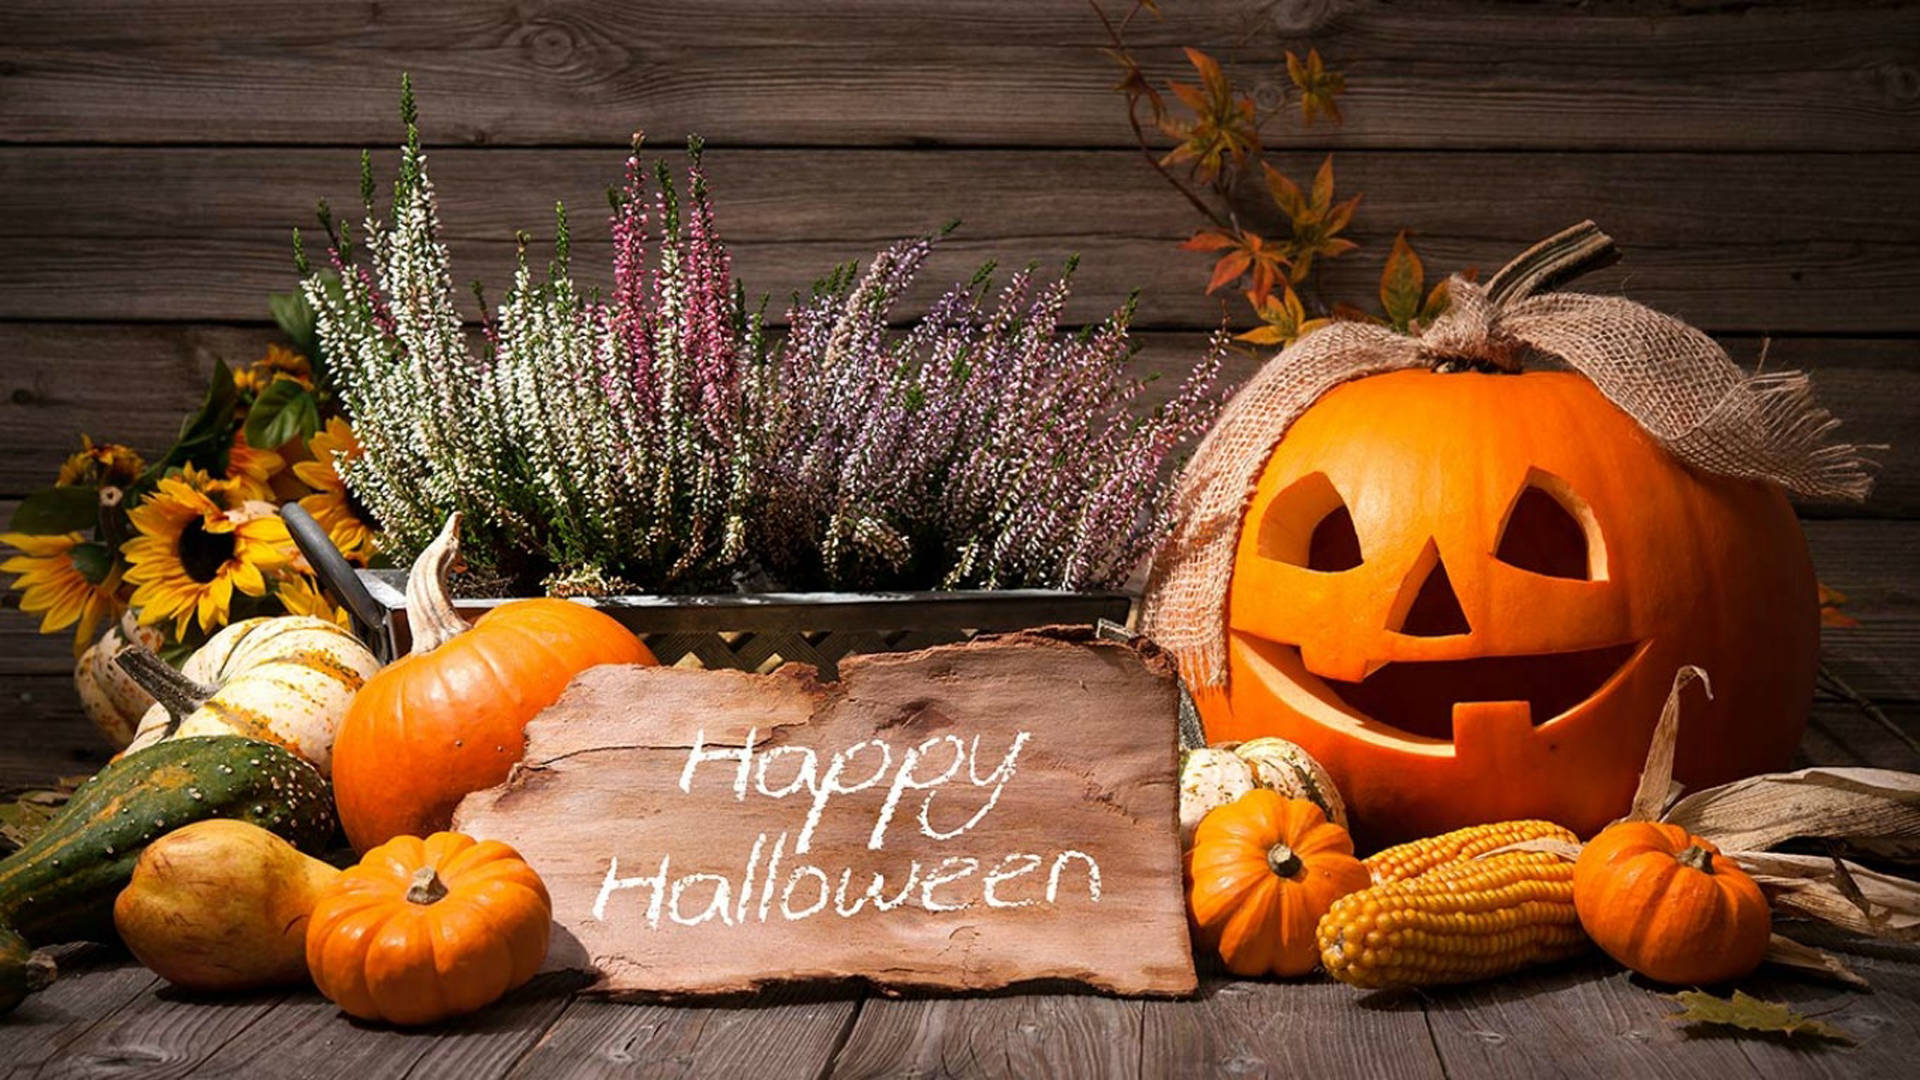 Celebrate Halloween With Fun And Joy